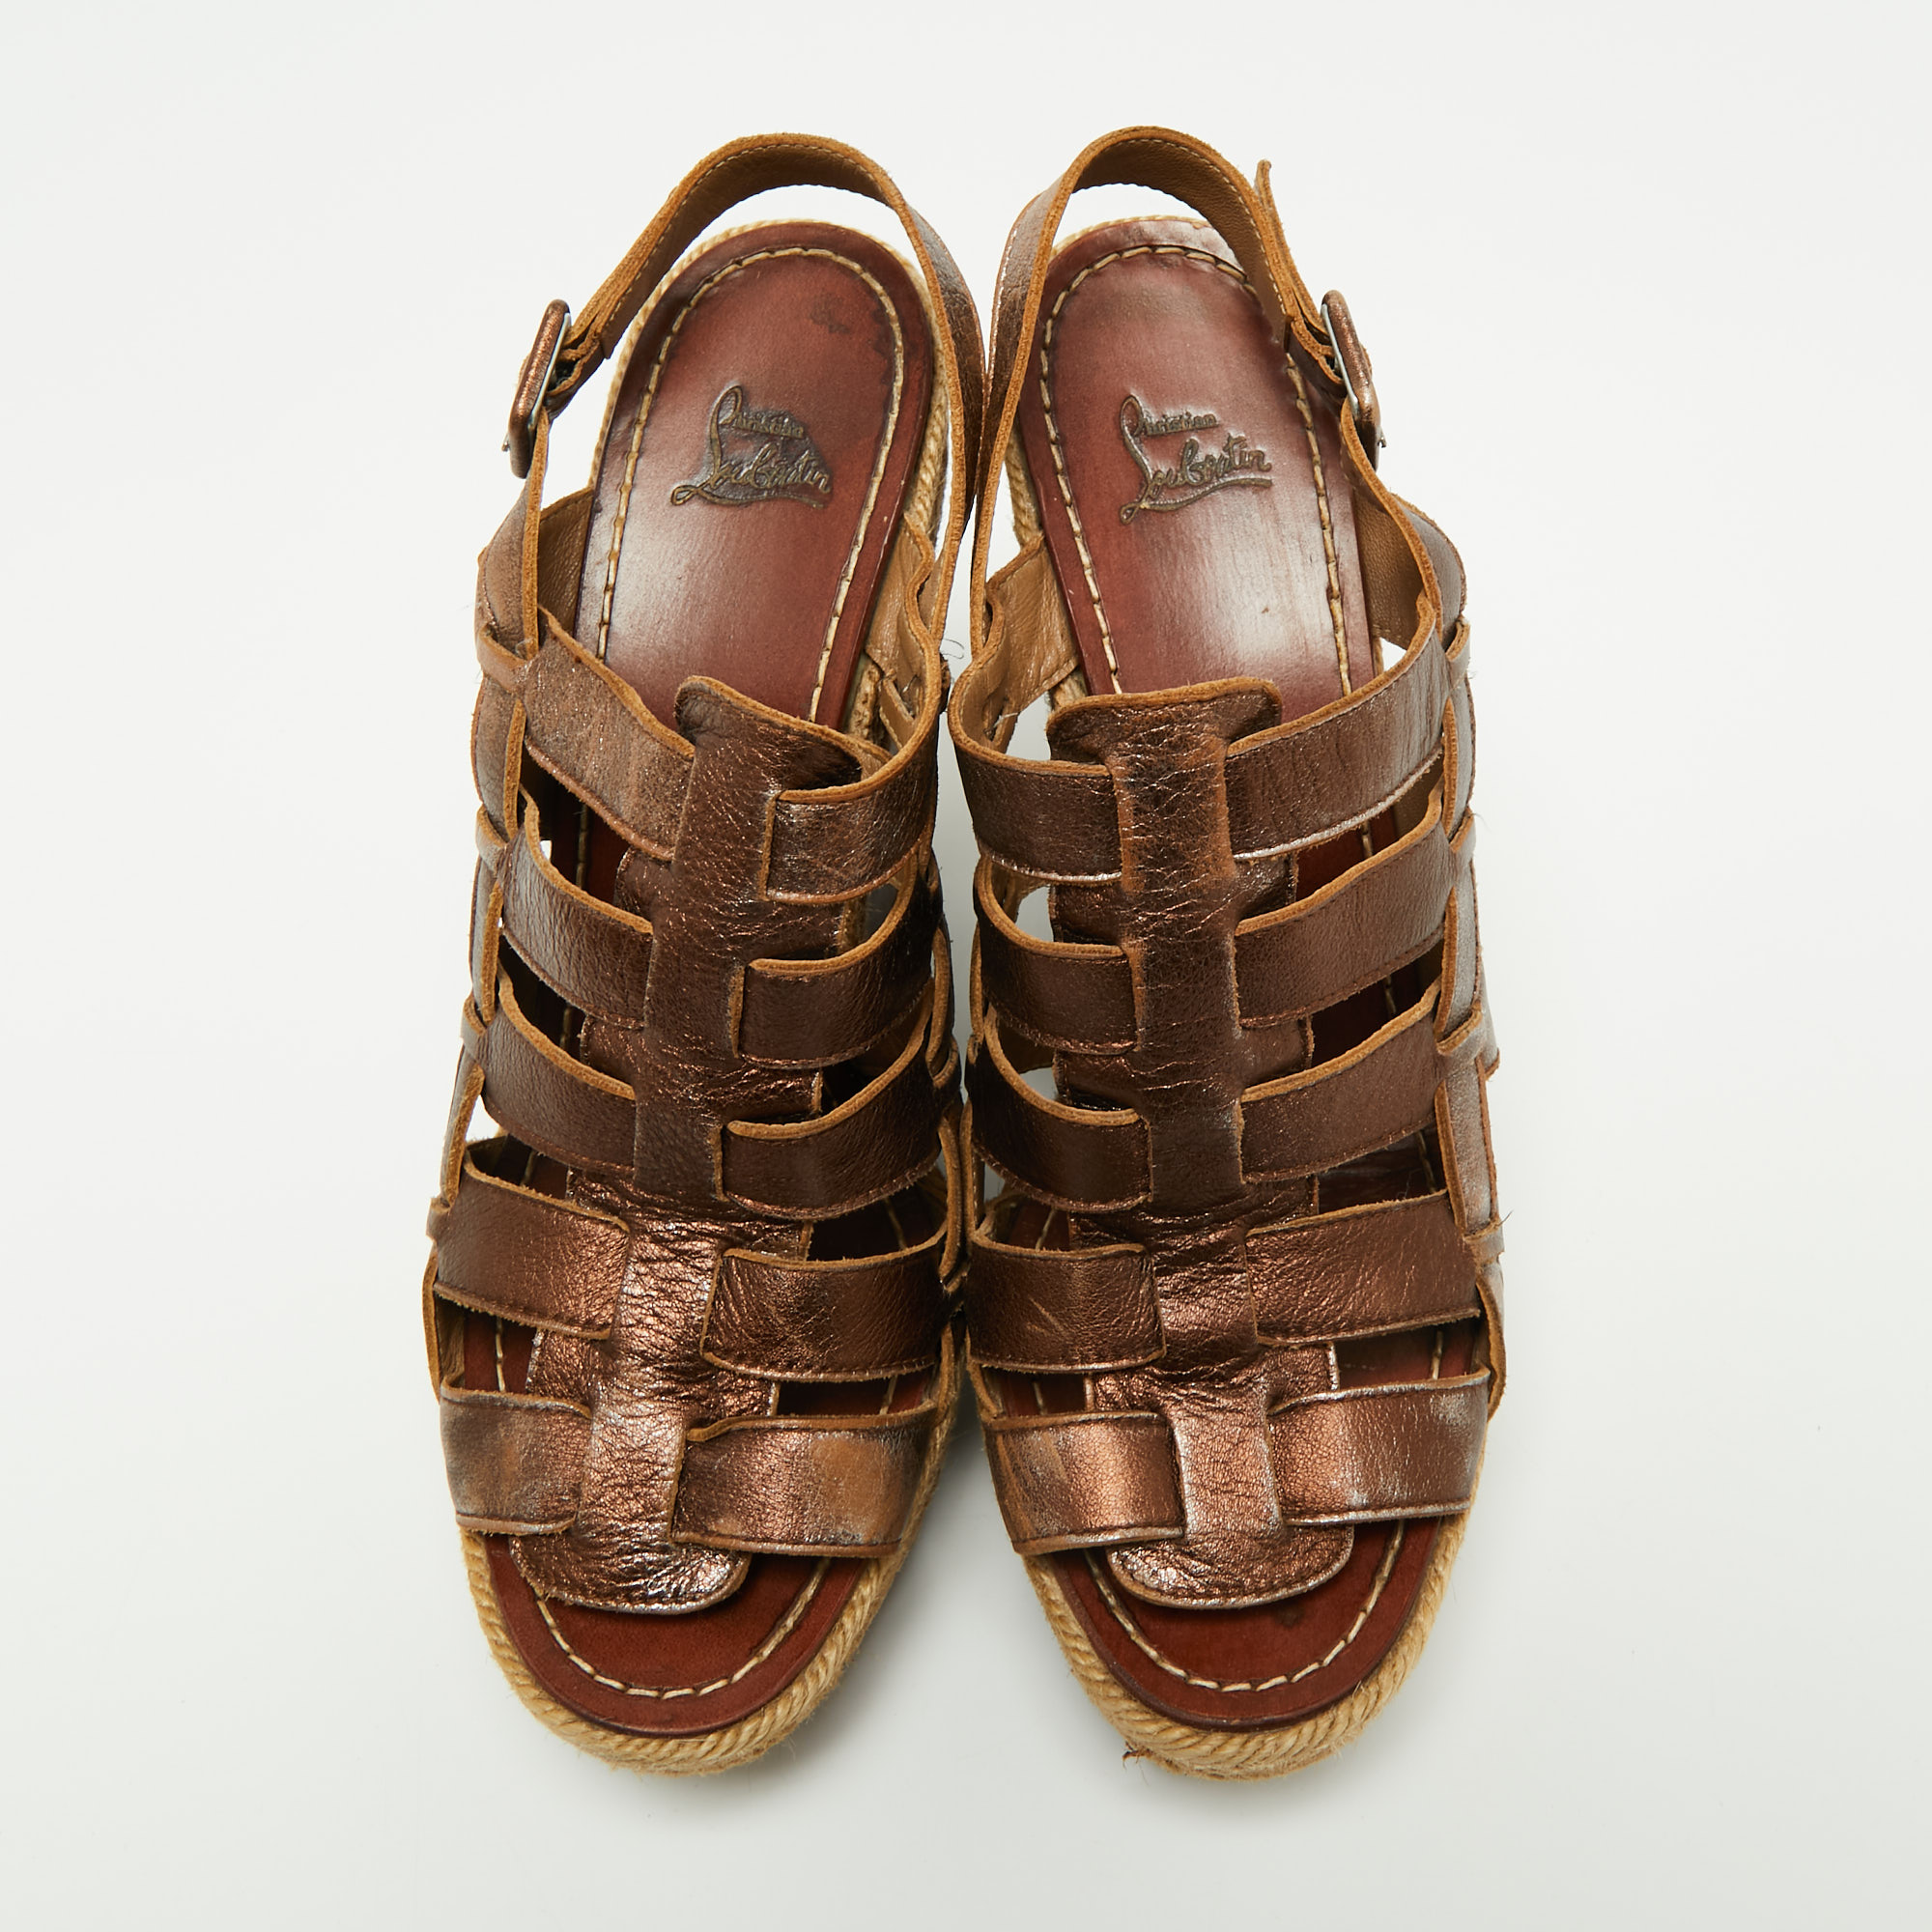 Christian Louboutin Metallic Bronze Leather Barcelona Espadrille Wedge Sandals Size 40